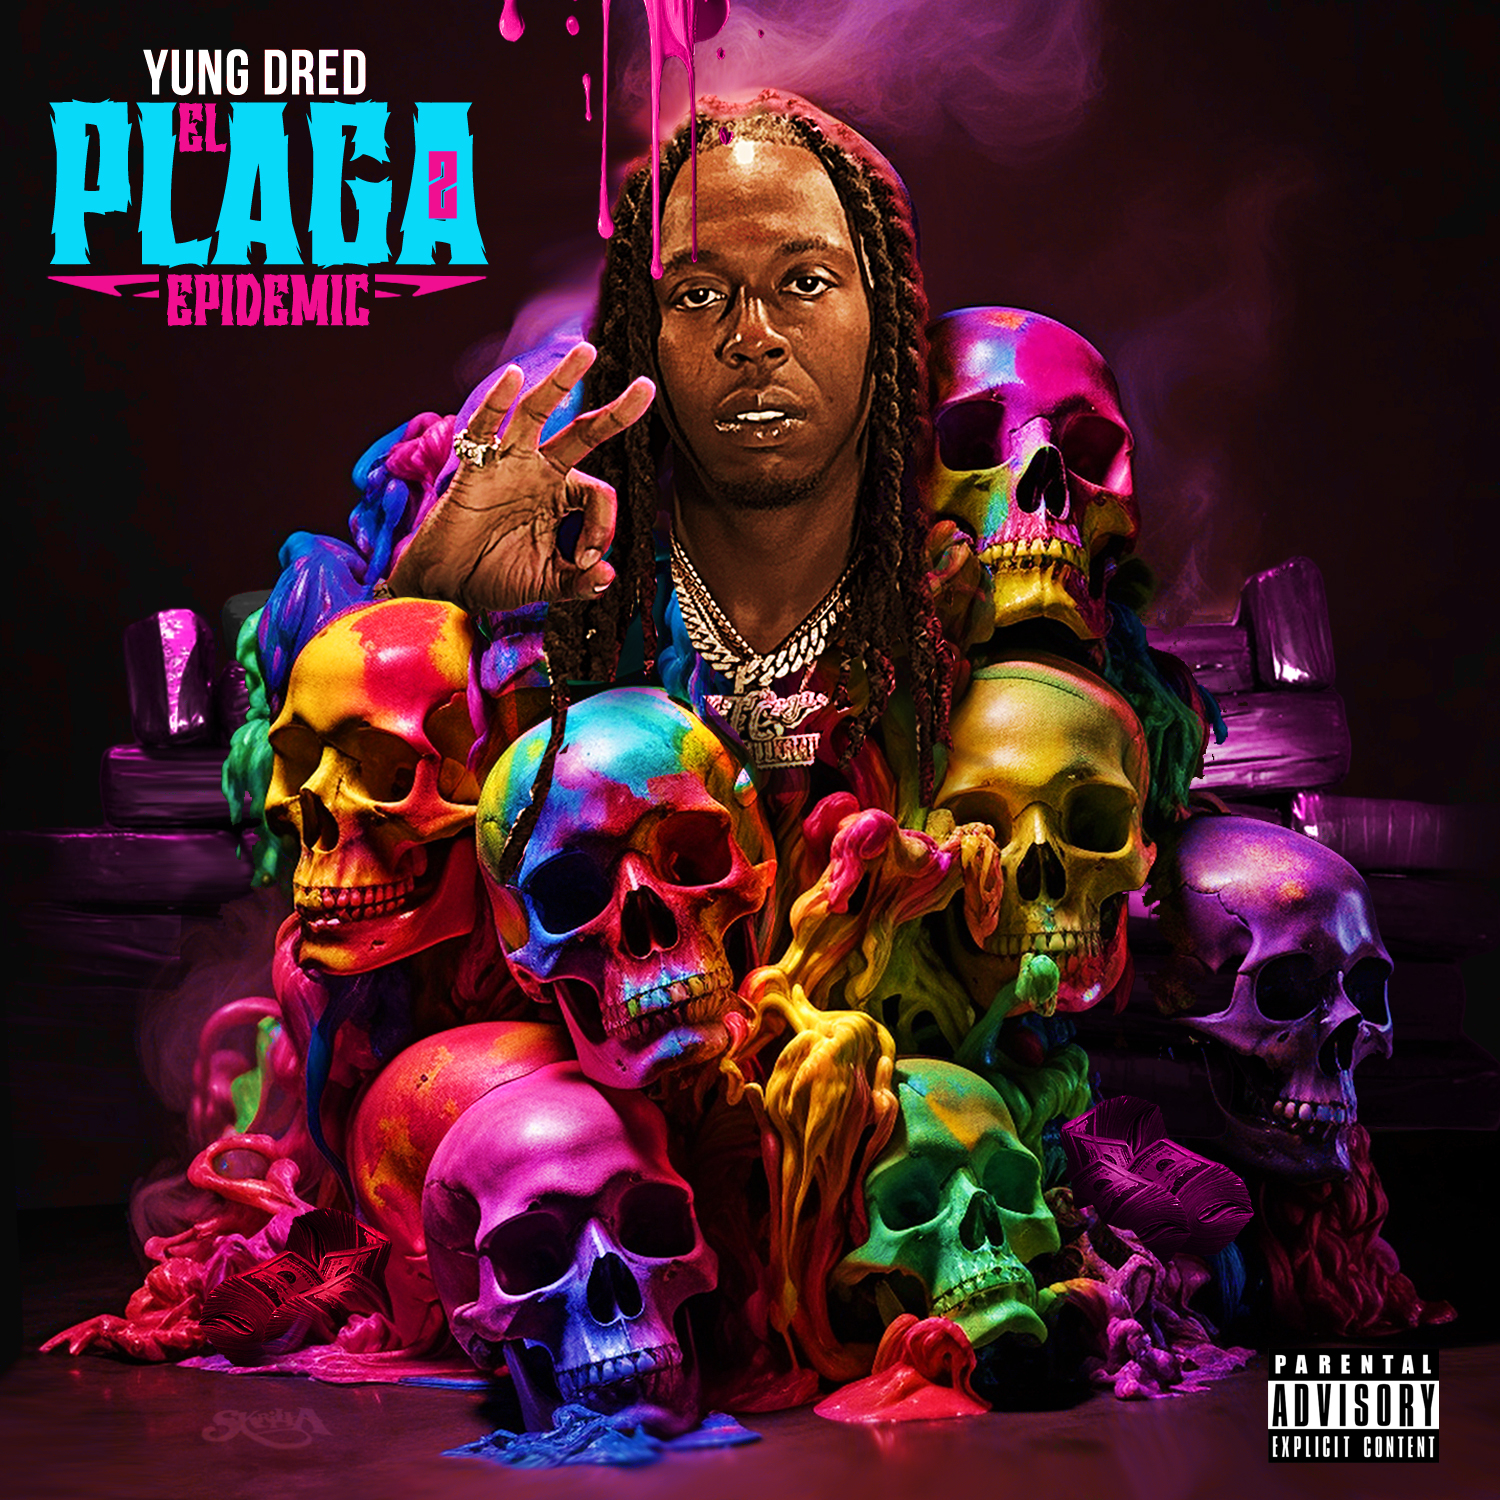 Yung Dred - El Plaga 2: Epidemic Cover Art